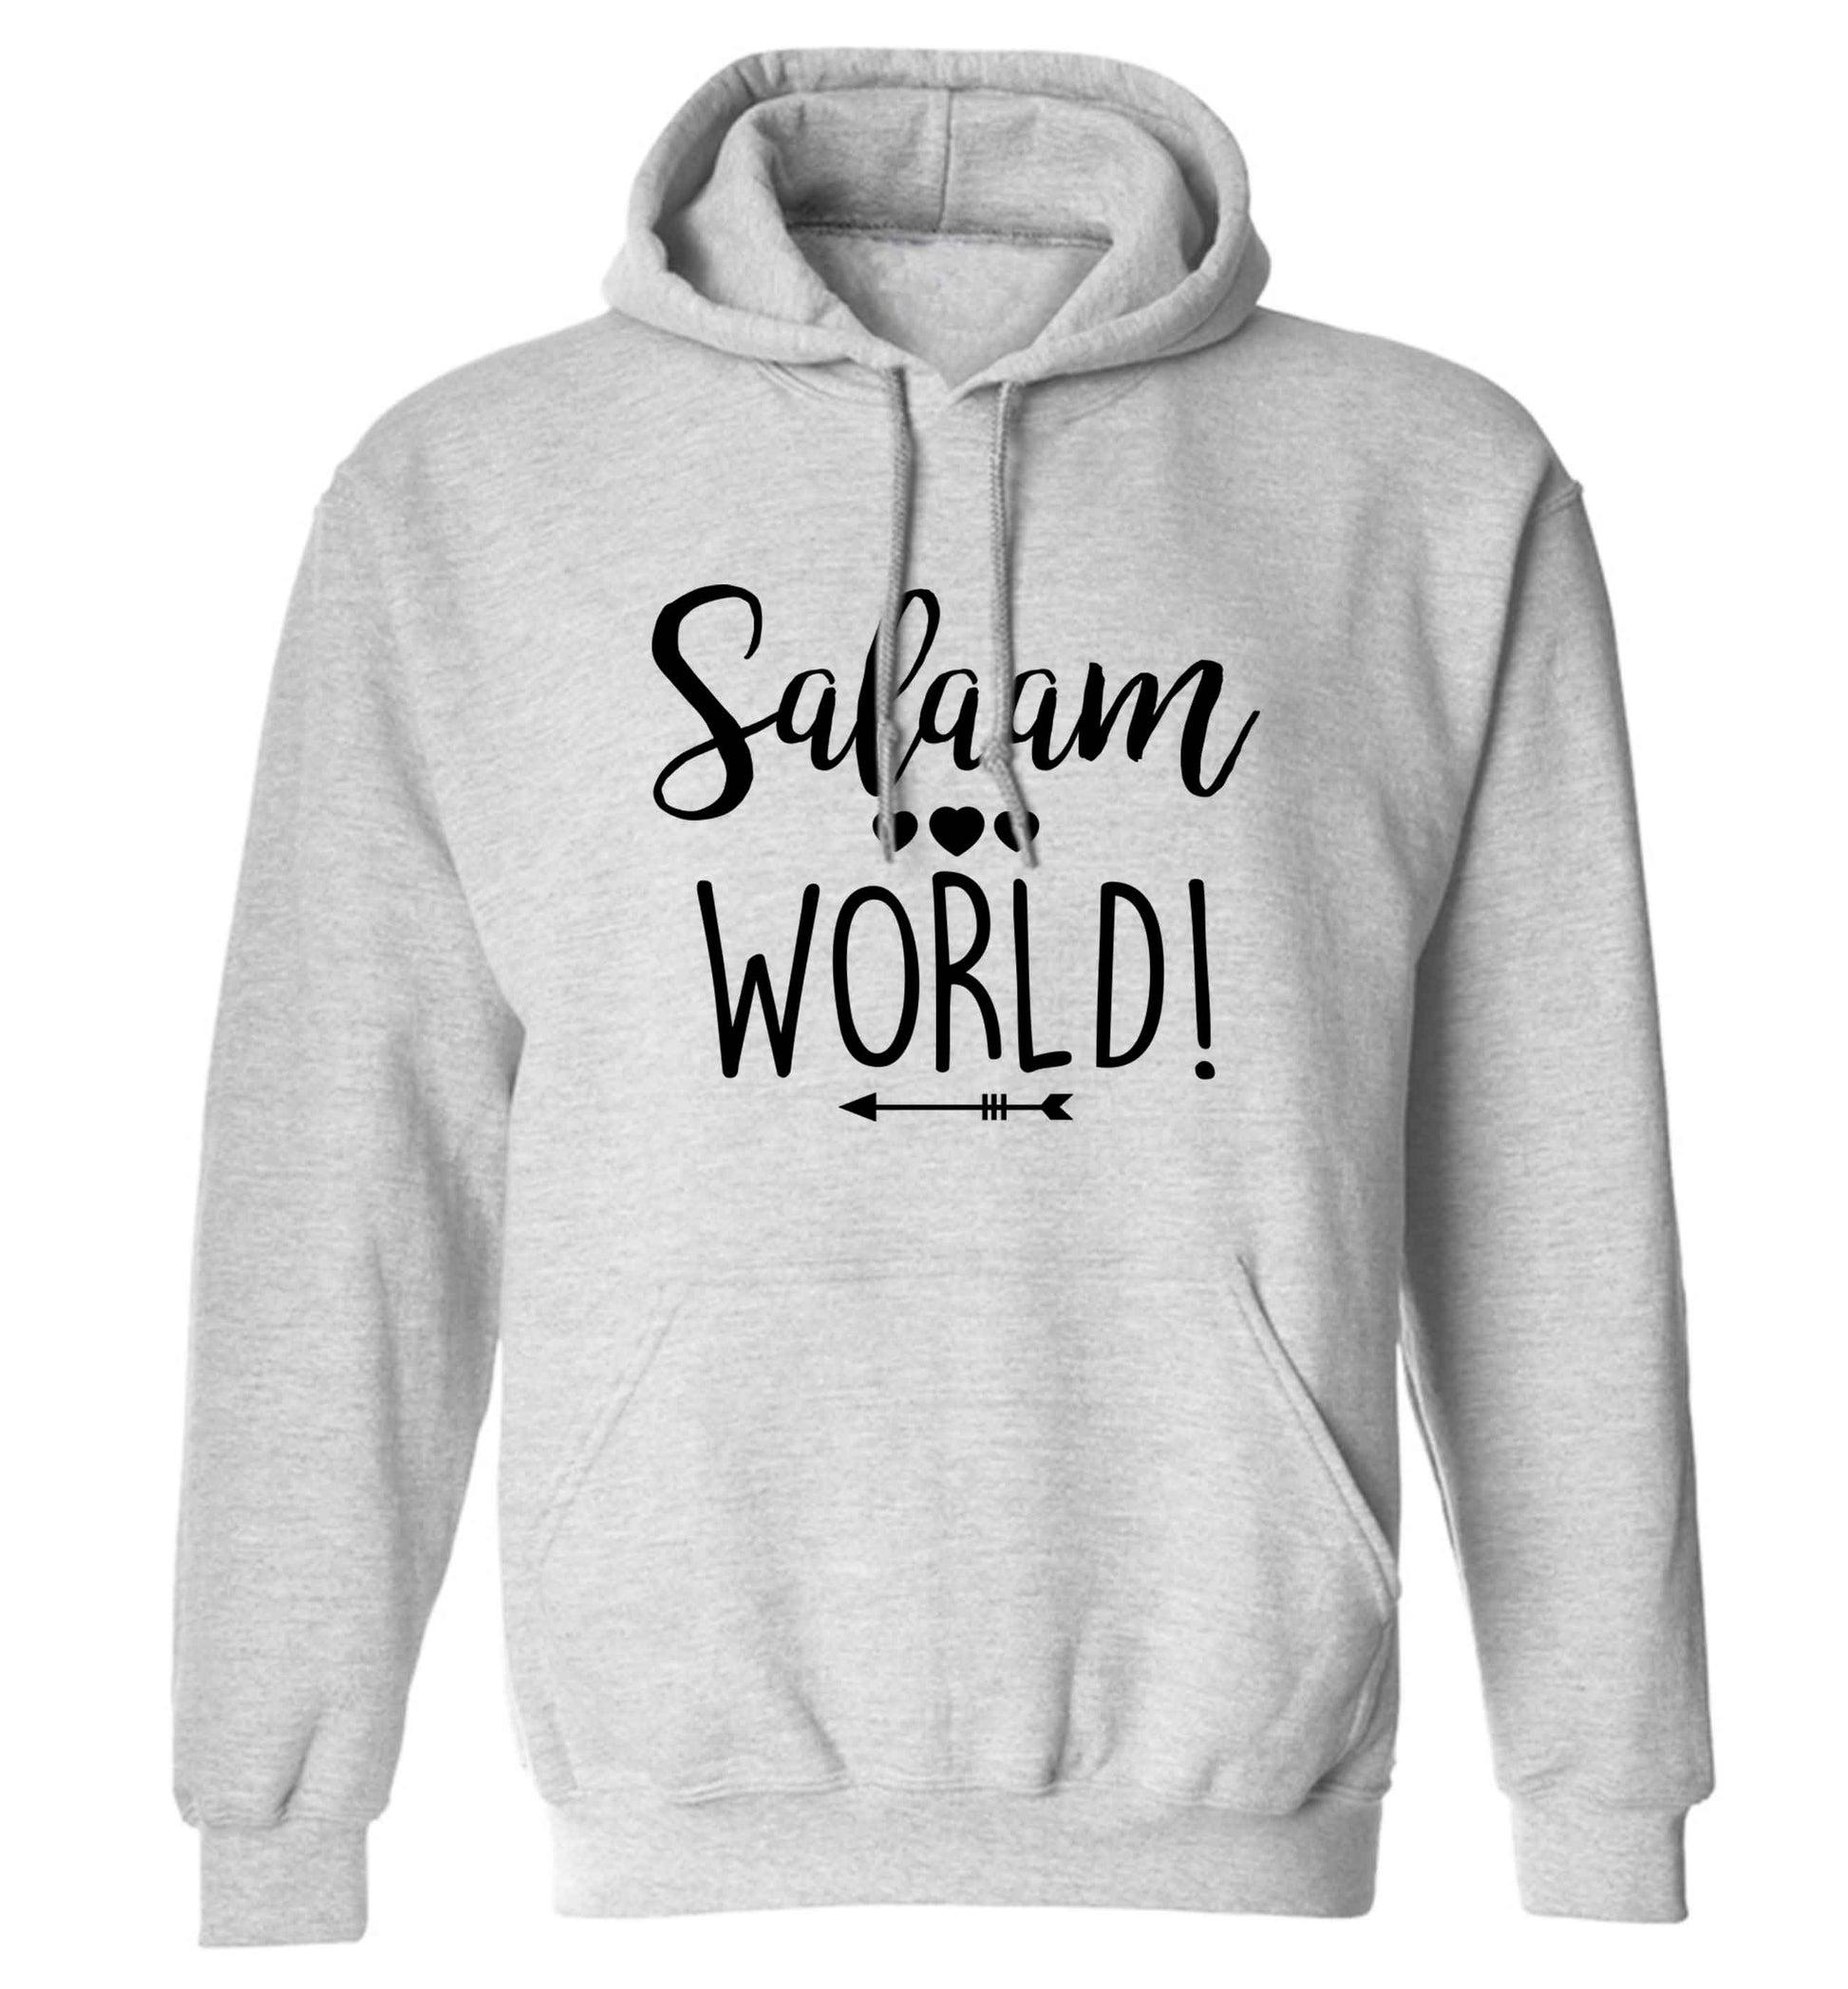 Salaam world adults unisex grey hoodie 2XL